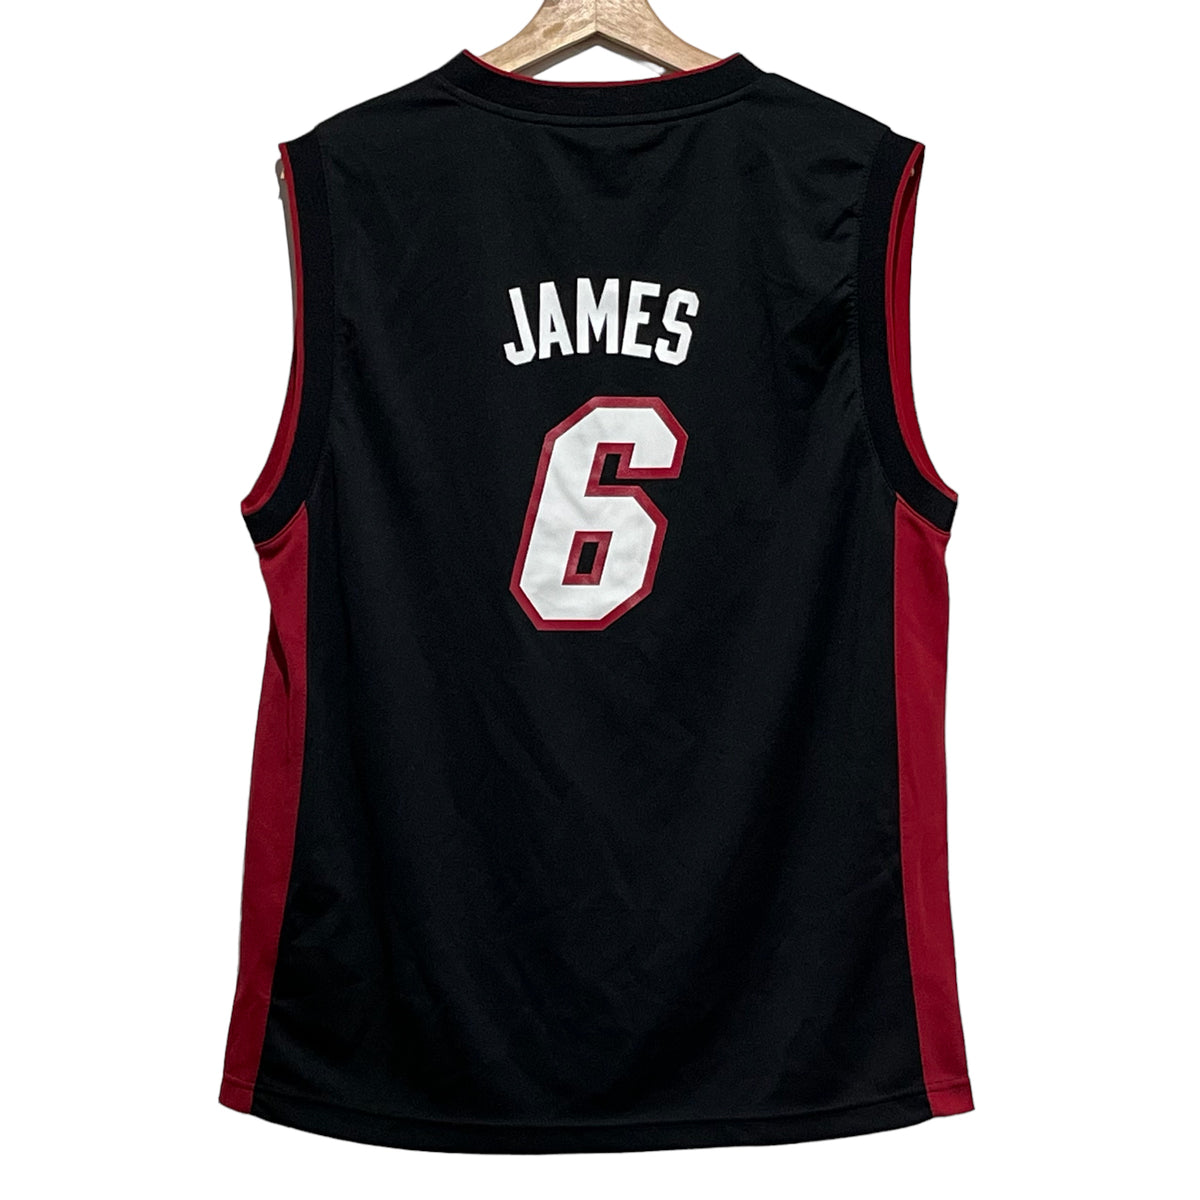 Adidas Cleveland Cavaliers lebron james jersey adult XL black